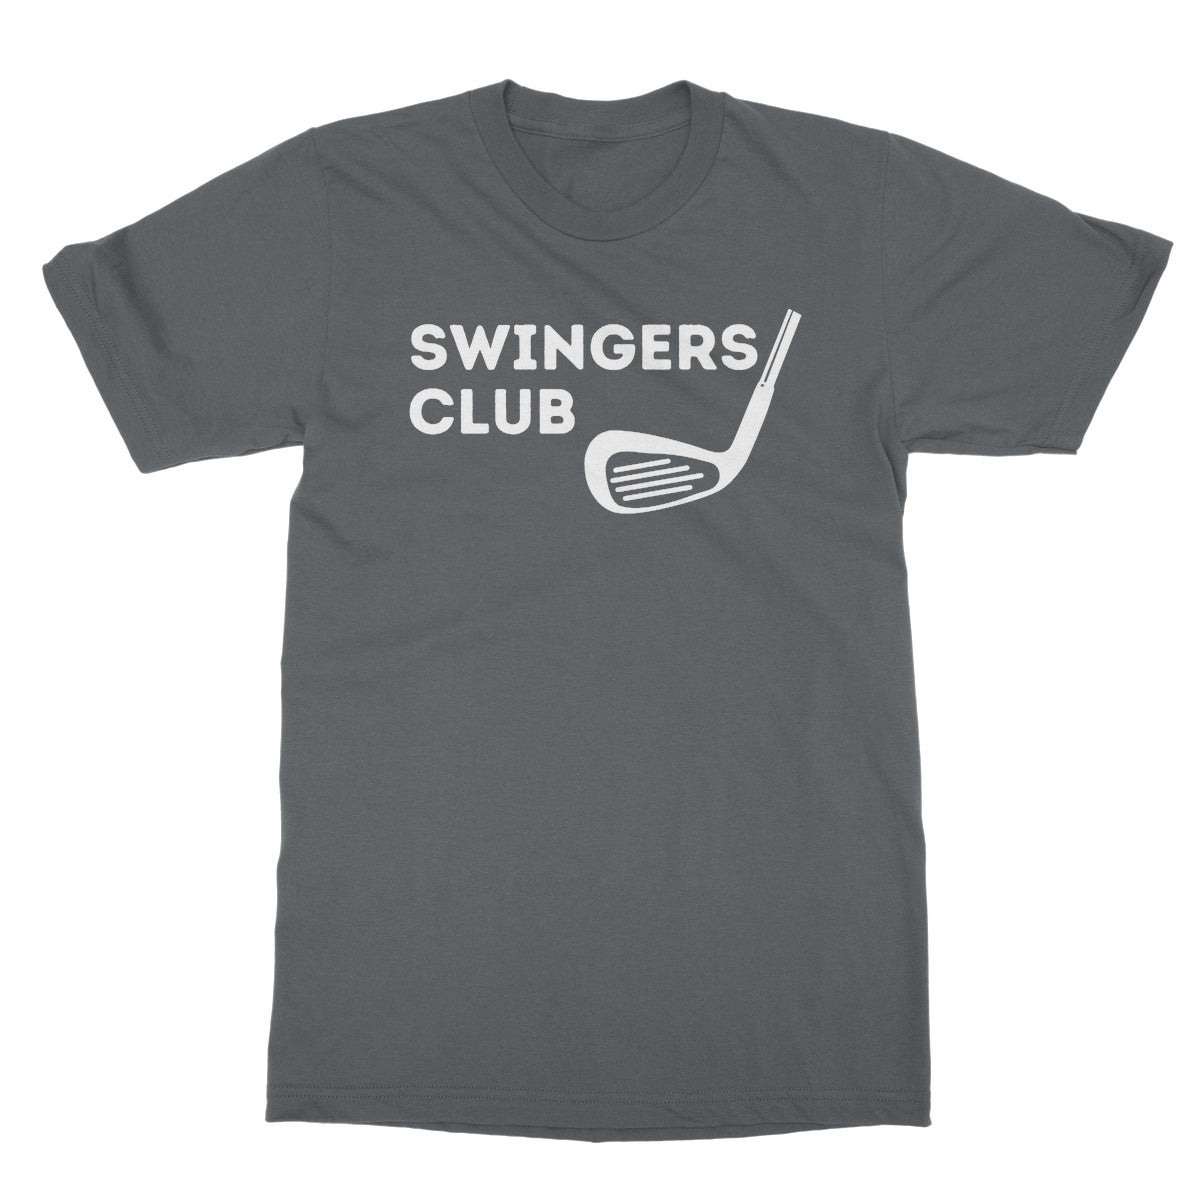 swingers club t shirt grey